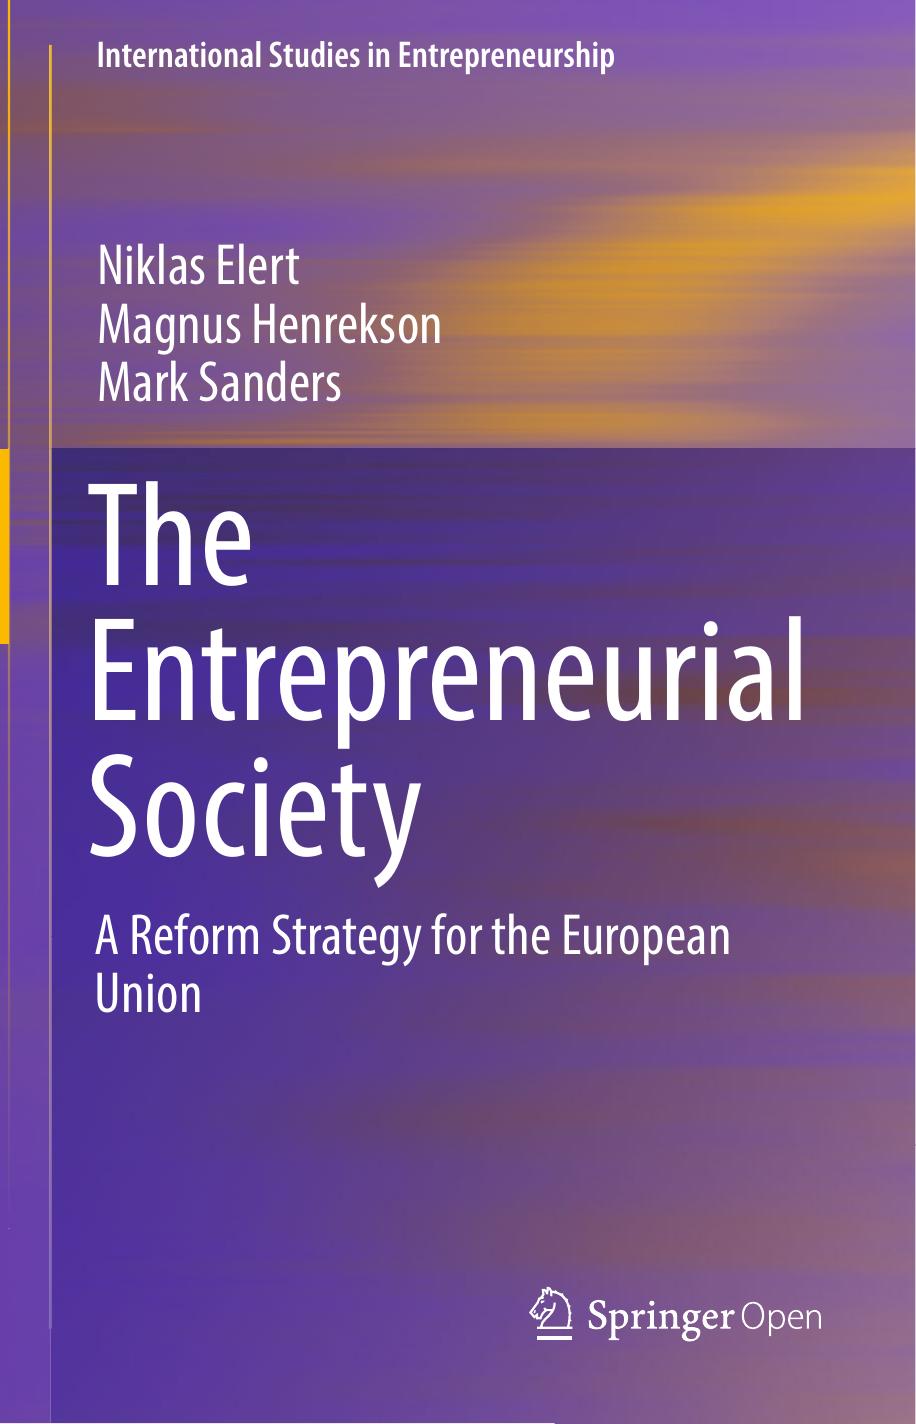 The Entrepreneurial Society by Niklas Elert & Magnus Henrekson & Mark Sanders